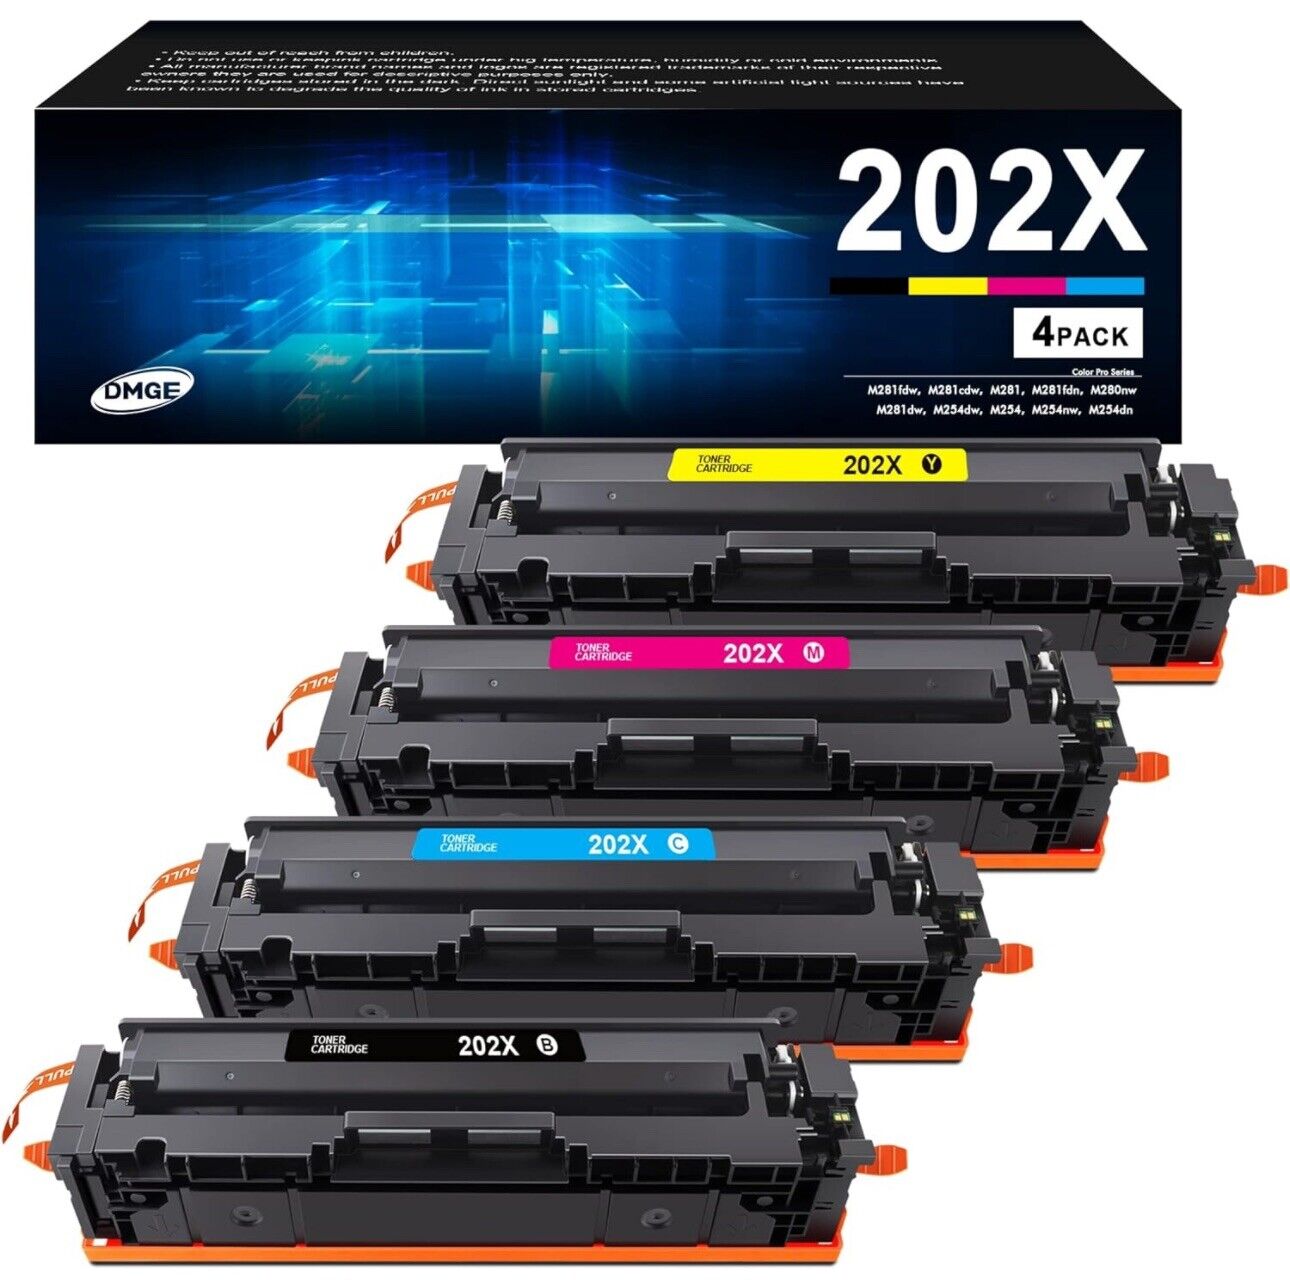 4 Pack 202X Toner Cartridges High Yield 202A For HP M254 Series CF500X M281fdw